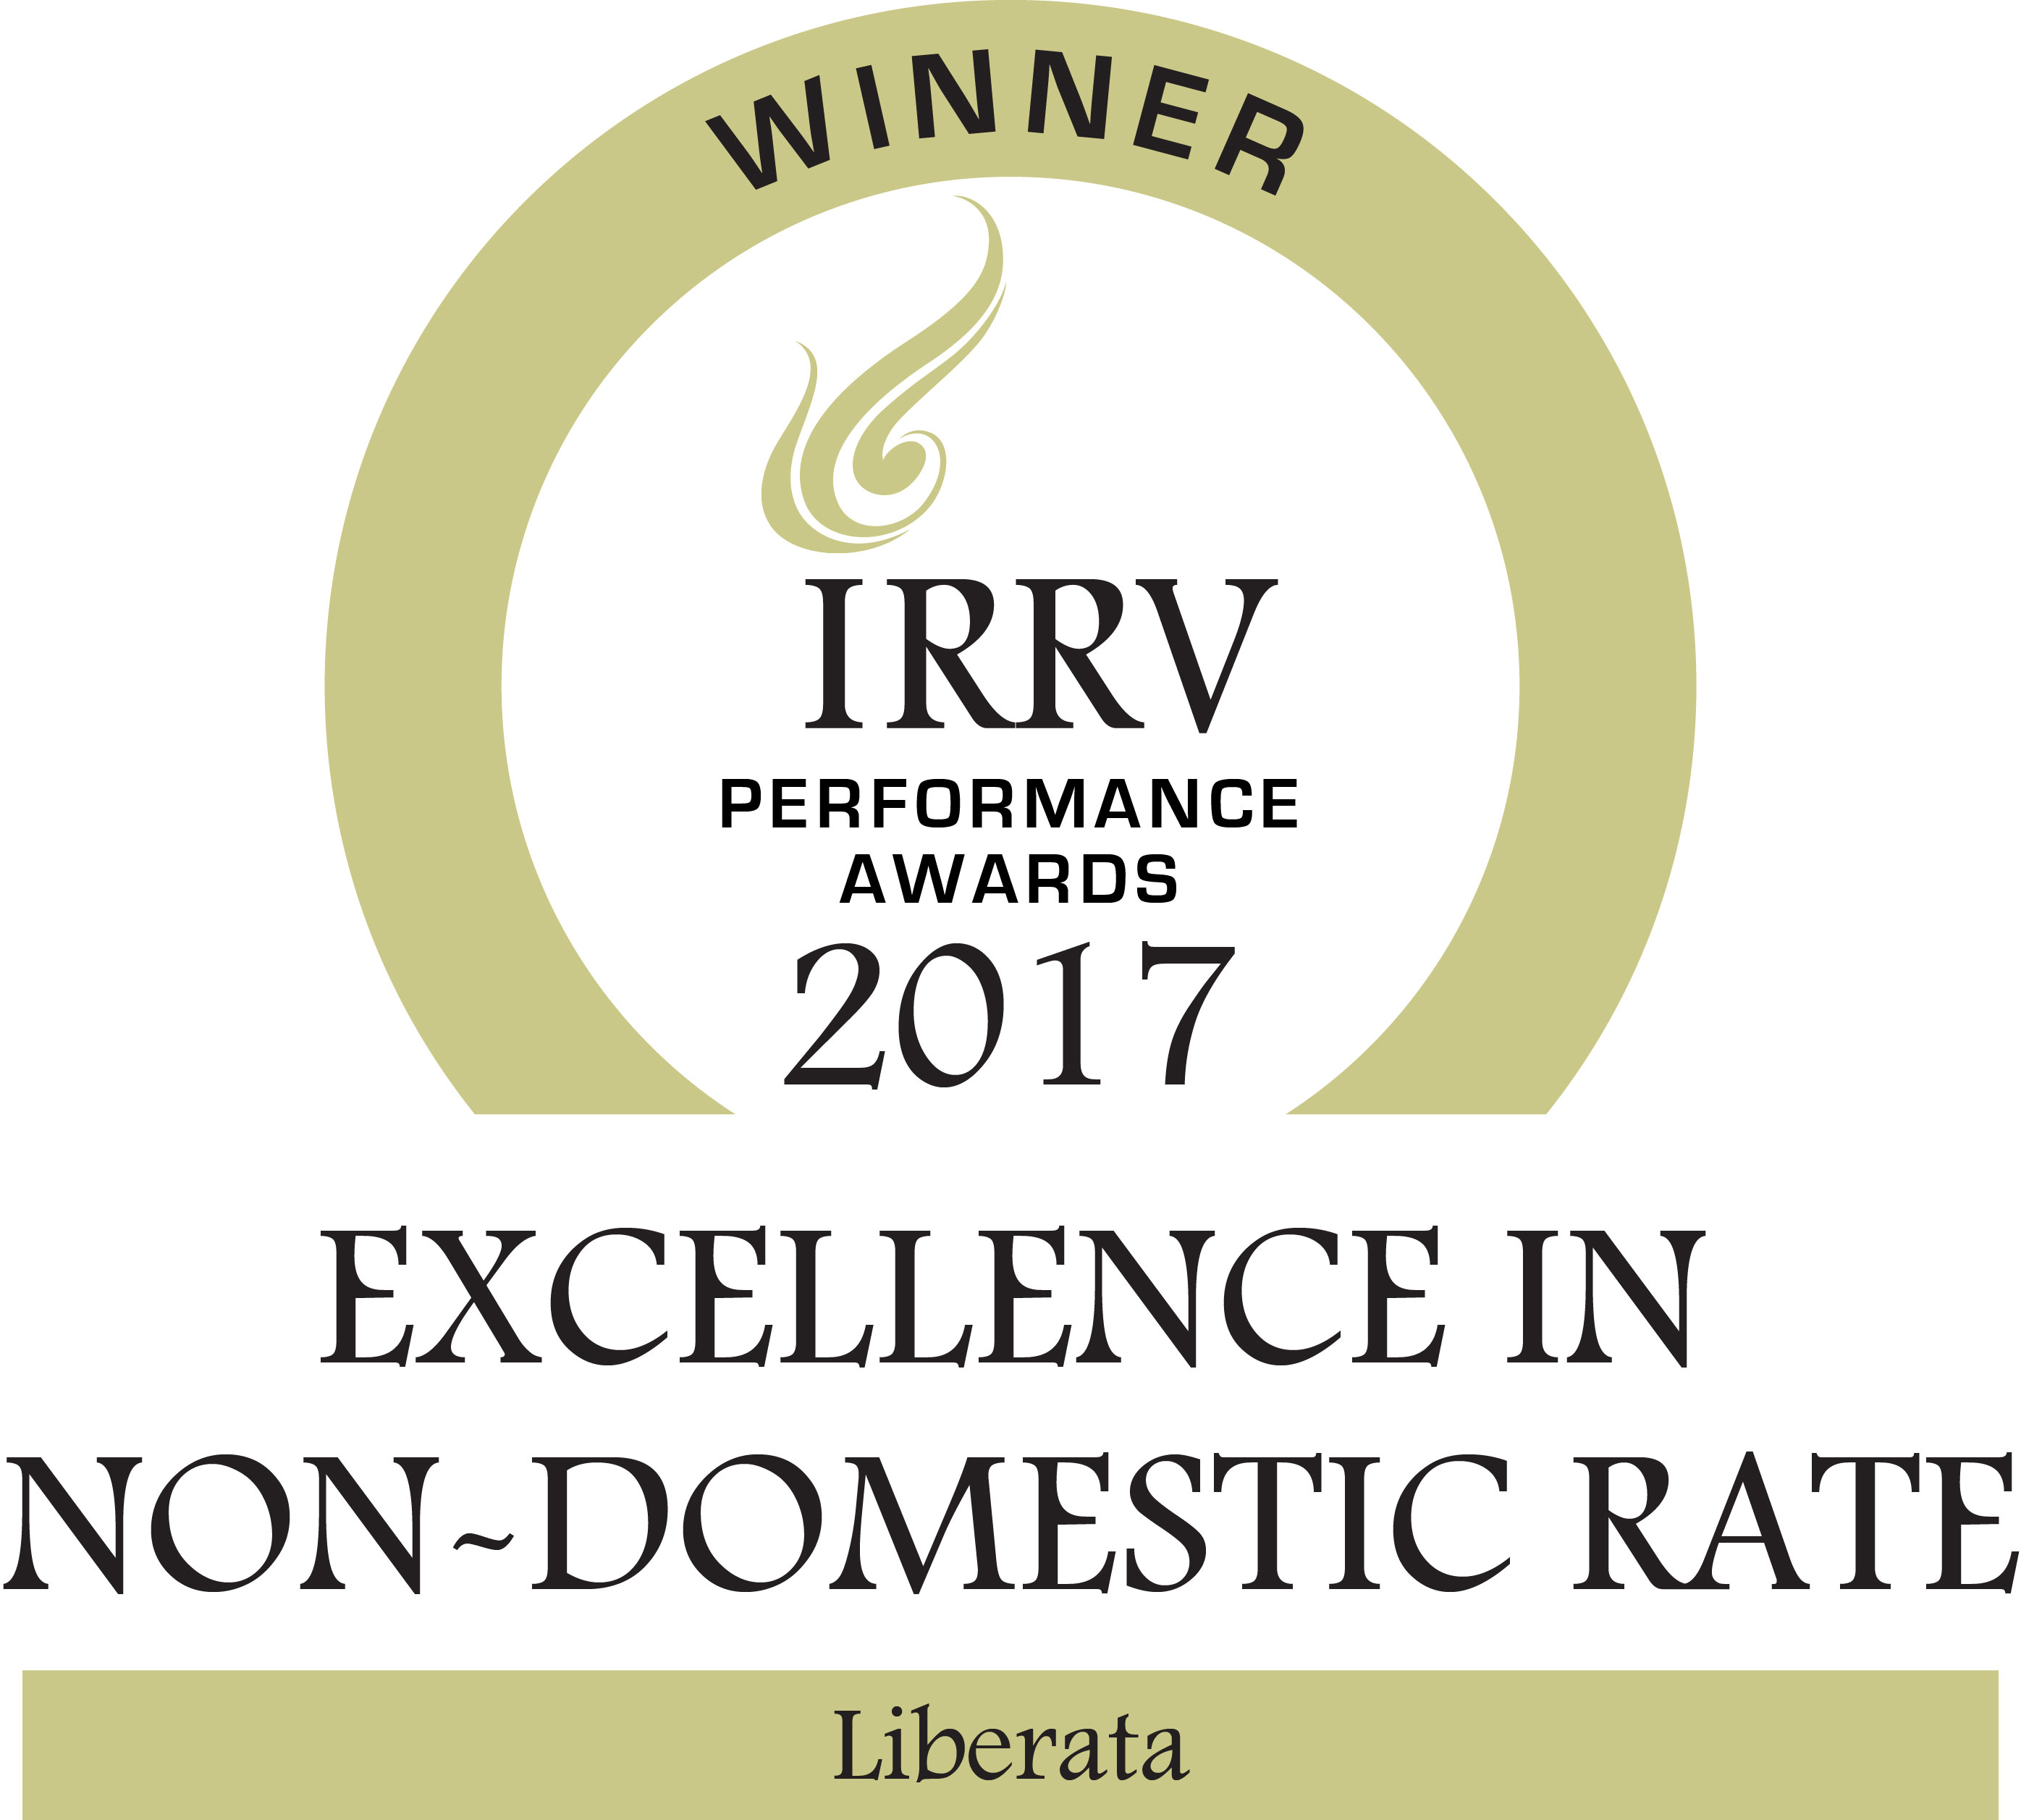 IRRV Performance Awards 2017